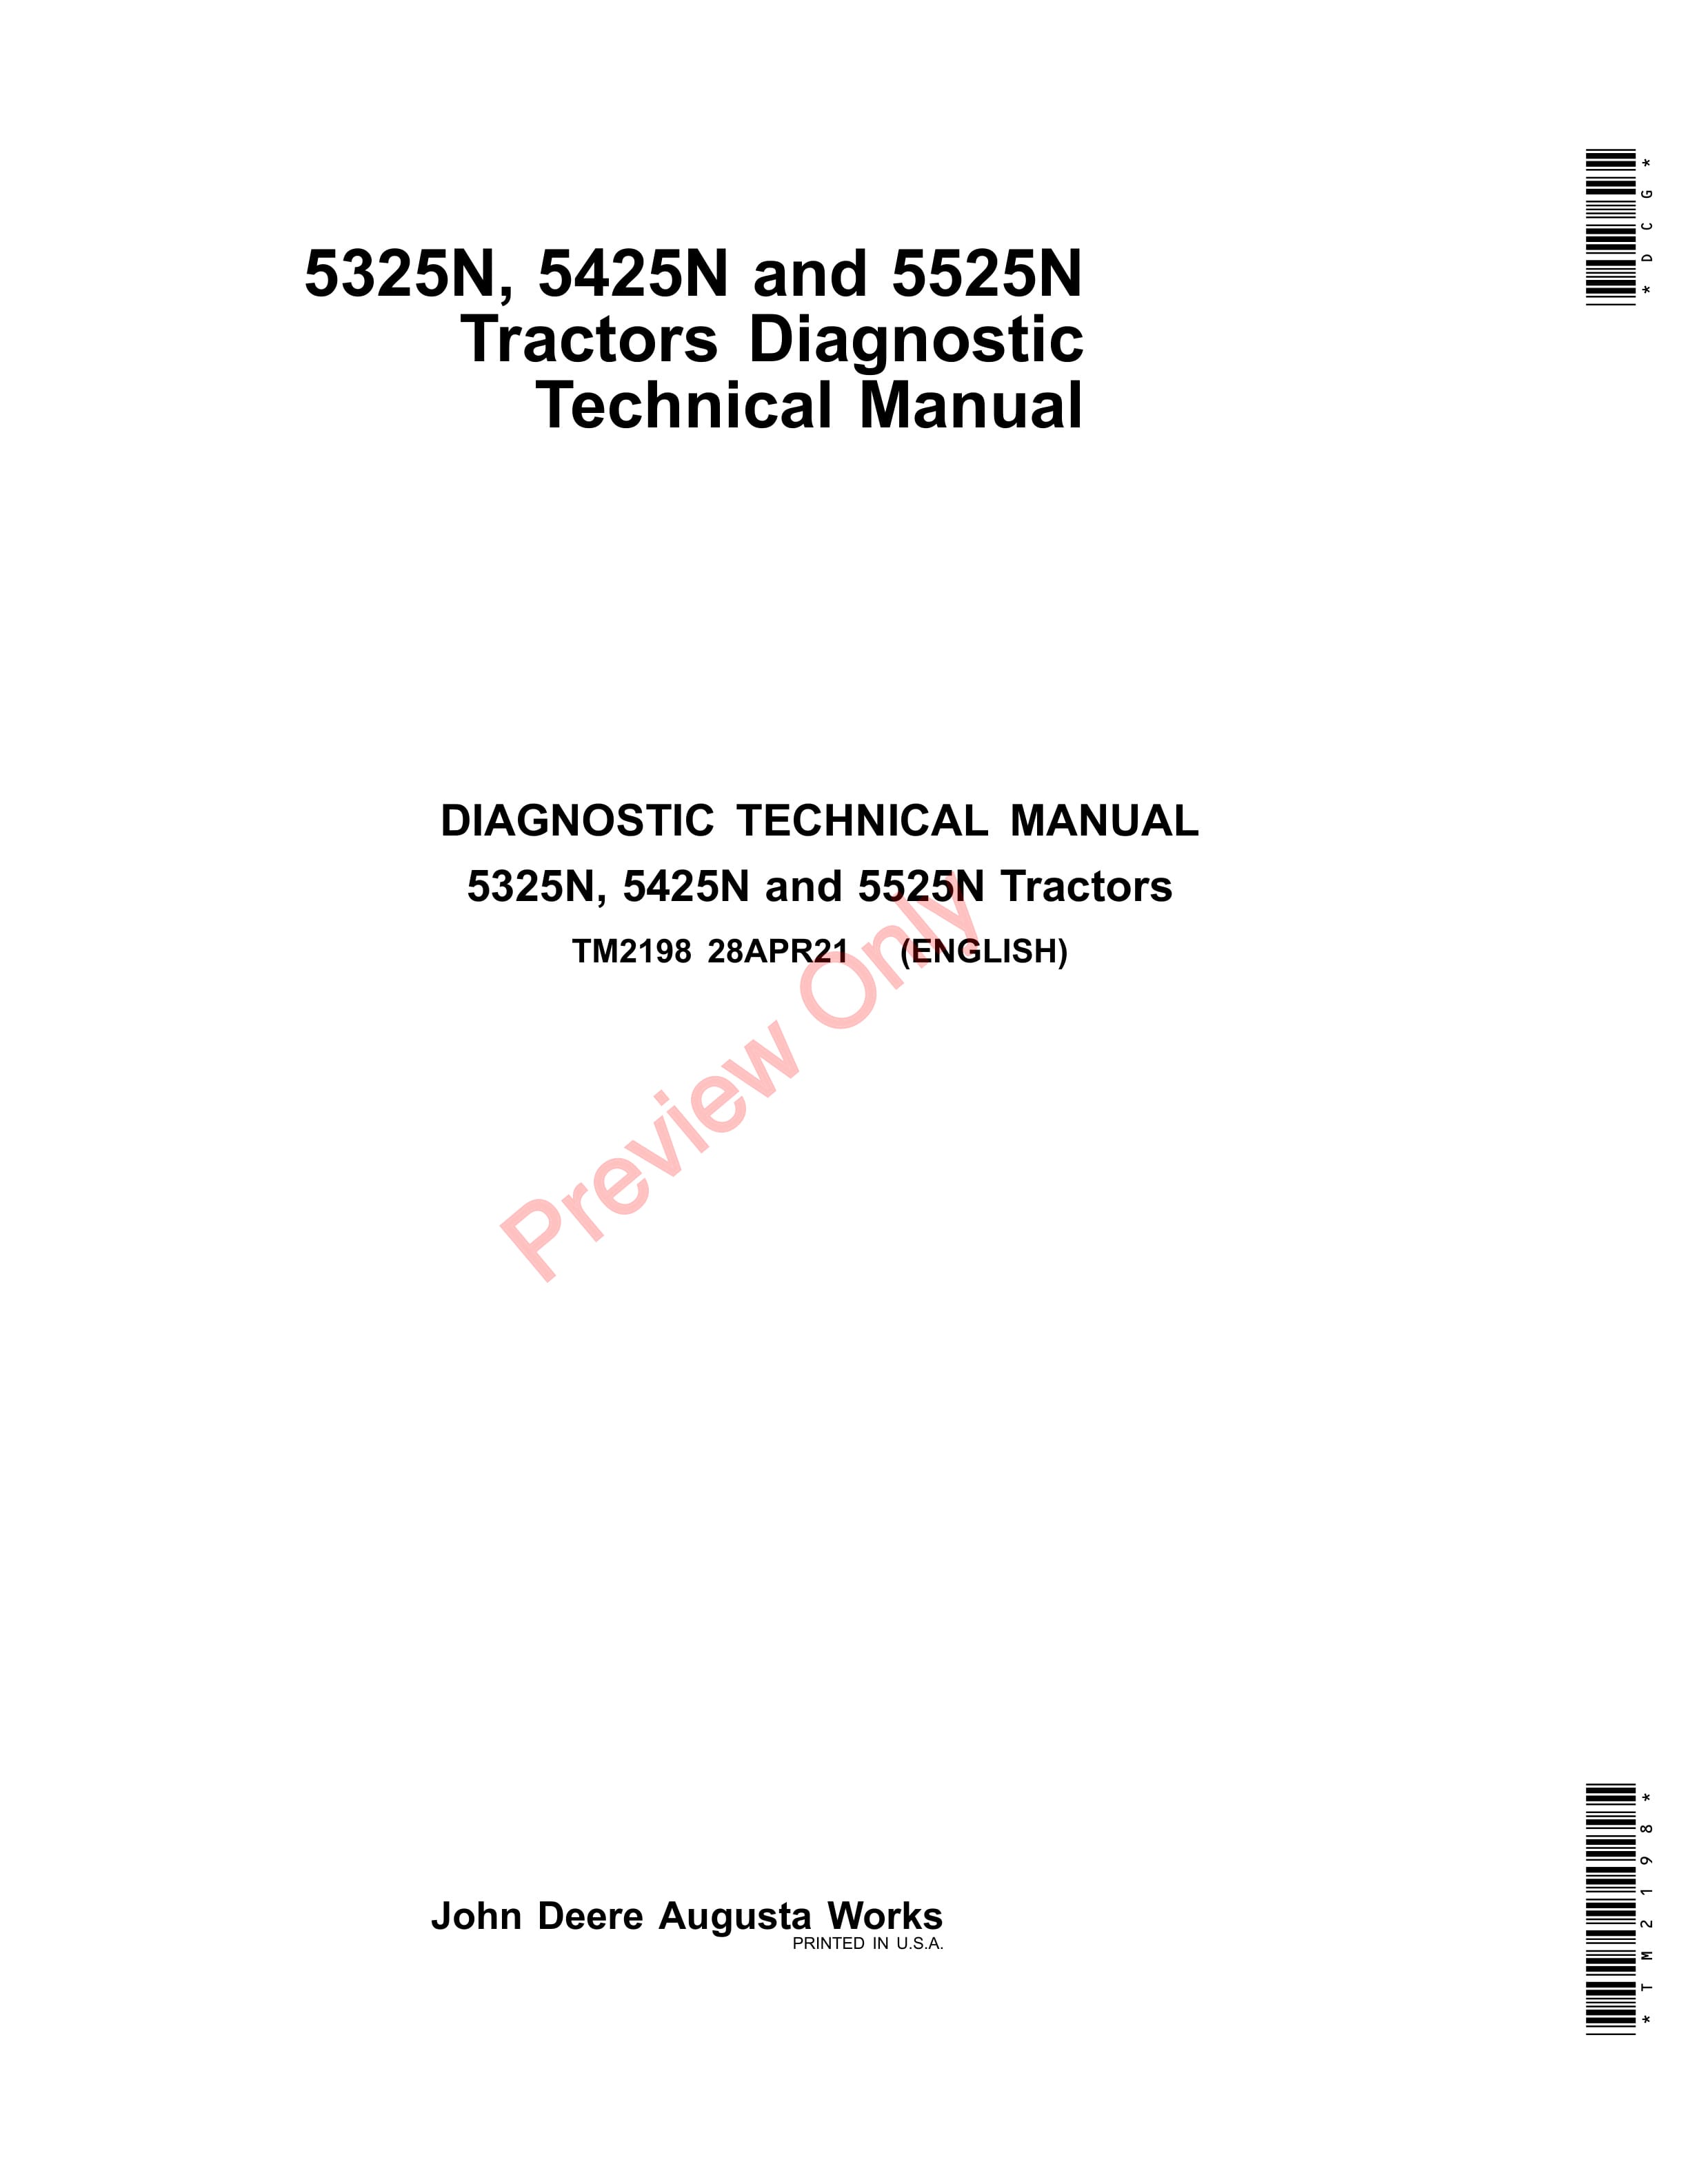 John Deere 5325N, 5425N and 5525N Tractors Diagnostic Technical Manual TM2198 28APR21-1